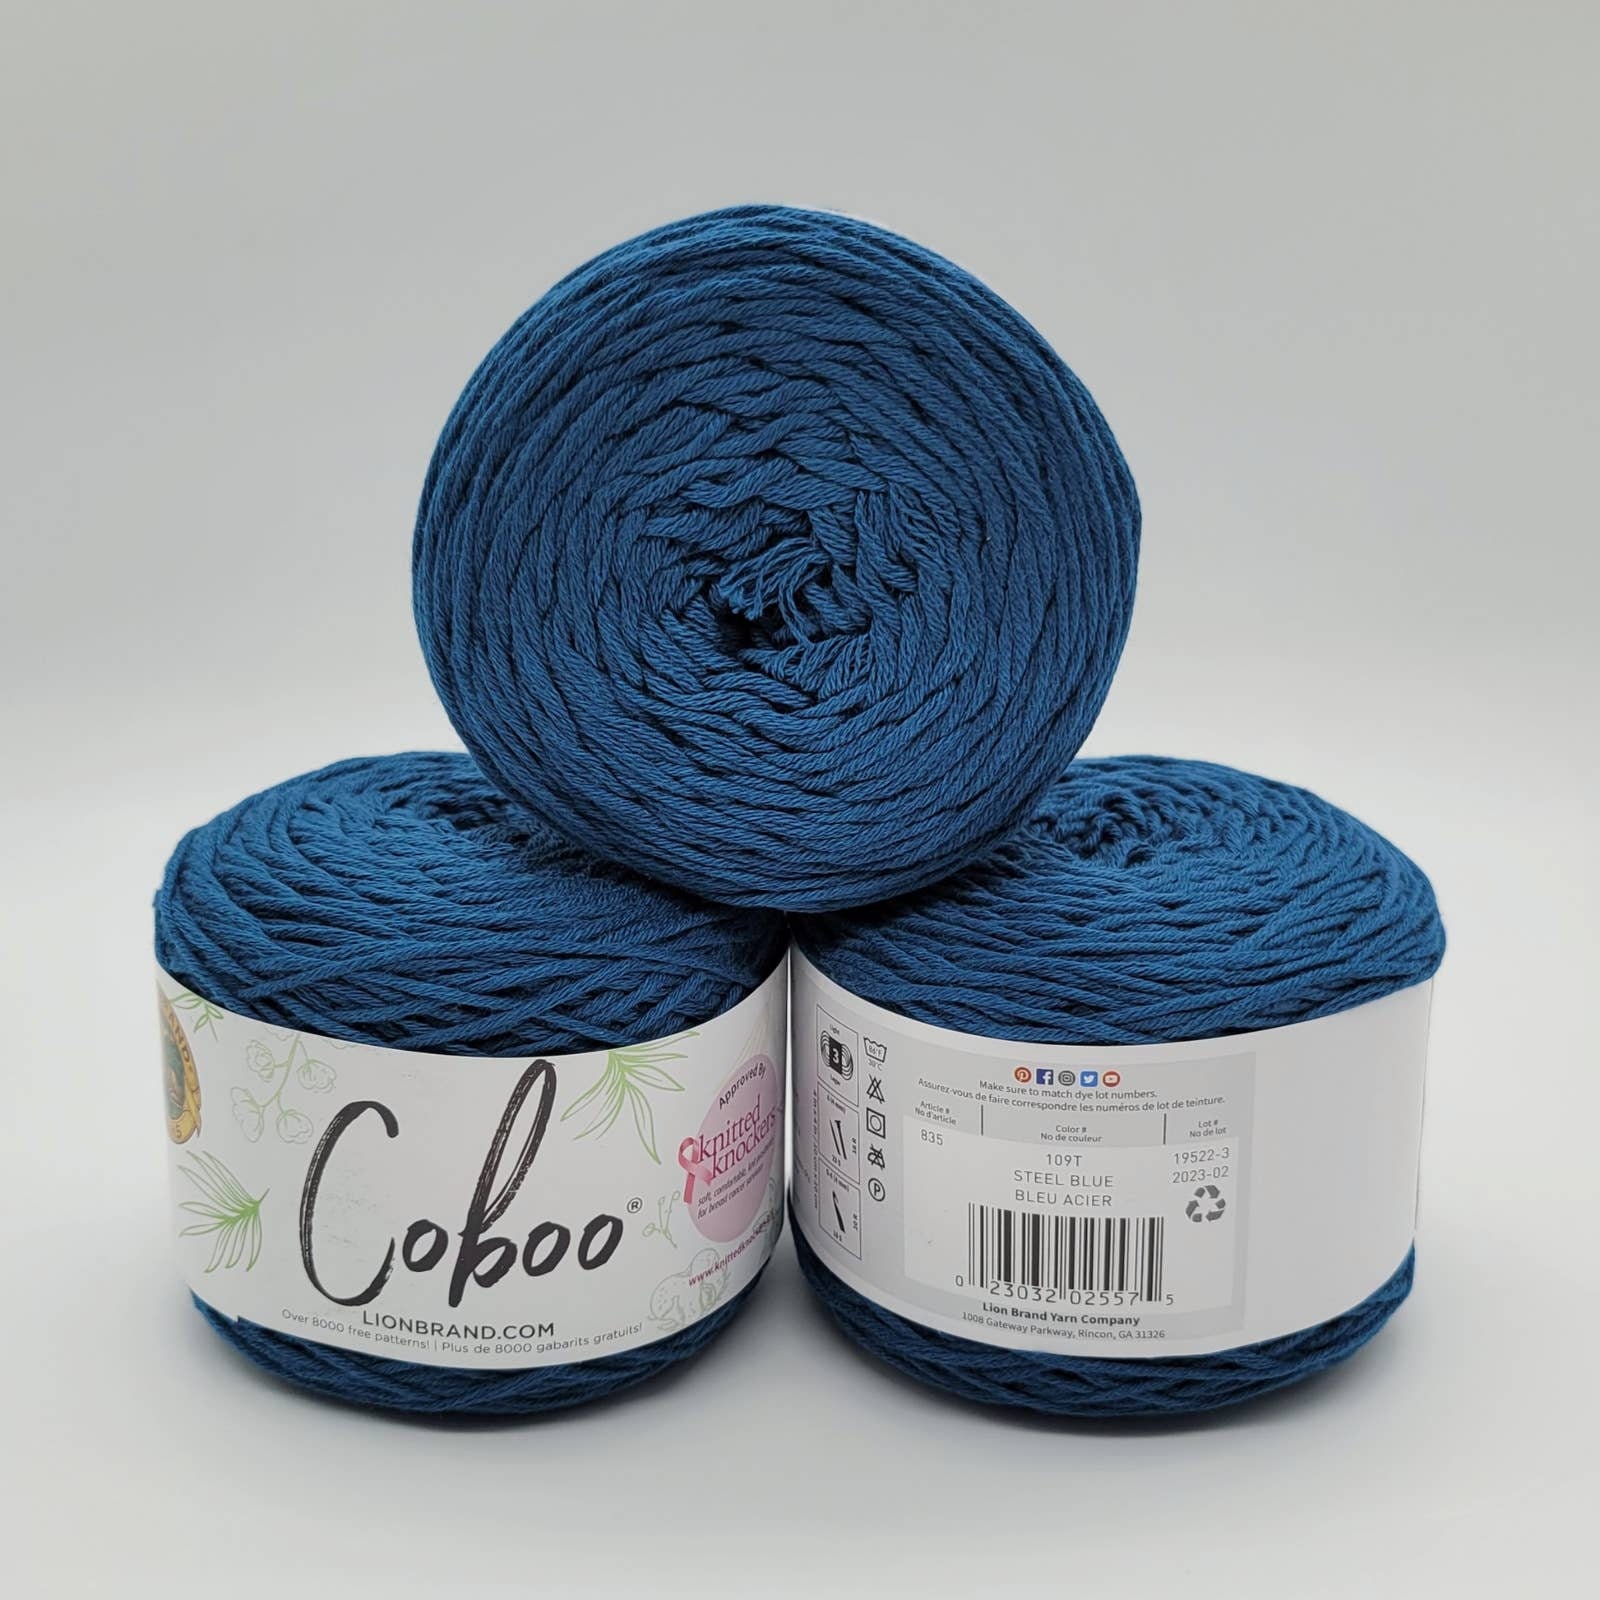 Lion Brand Yarn Coboo Steel Blue Light Blue Yarn 3 Pack 